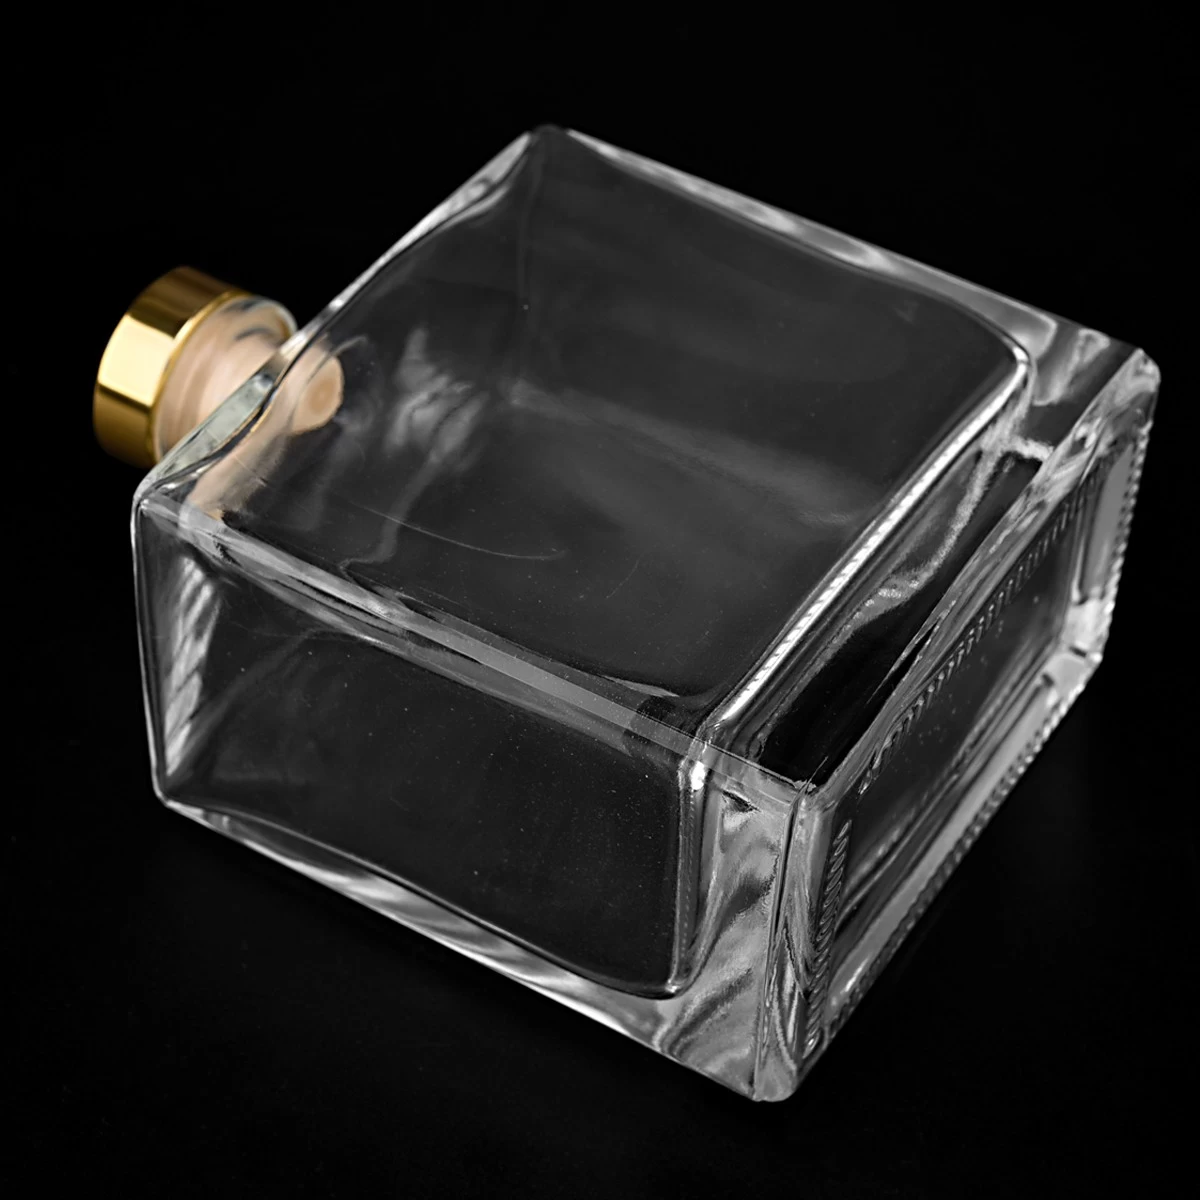 home decor round glass diffuser bottle - COPY - 7q186v